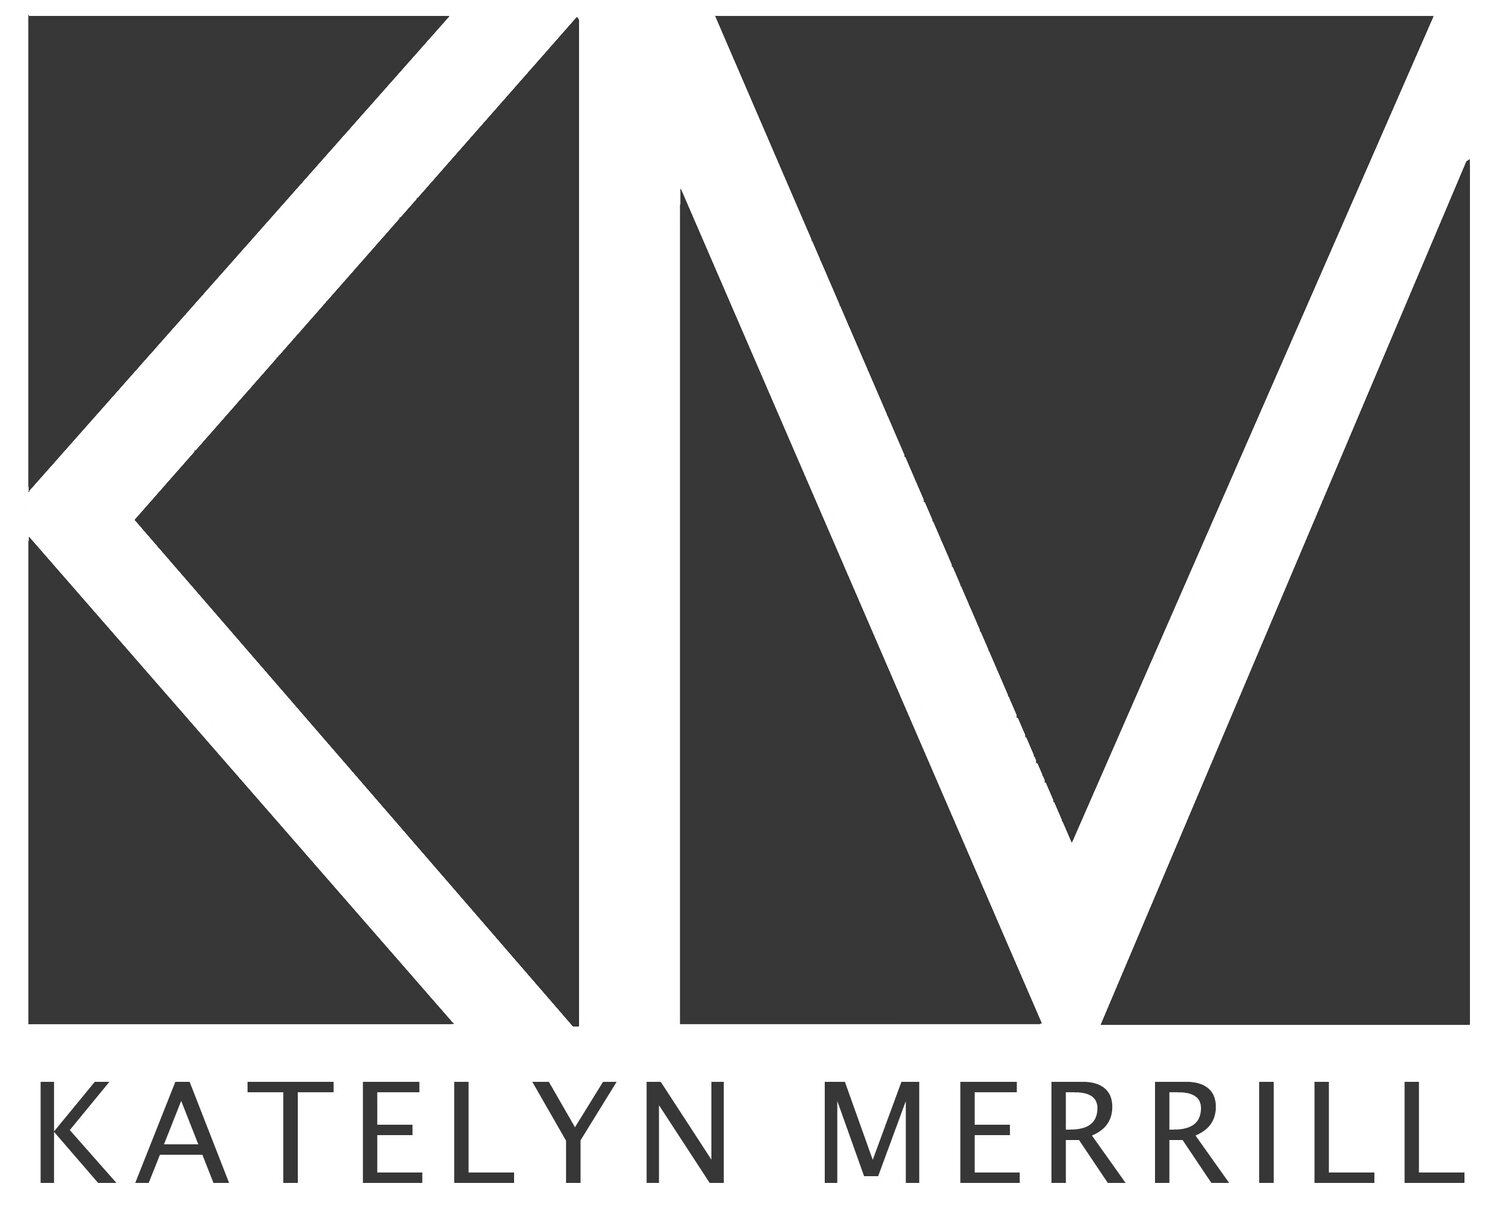 Katelyn Merrill